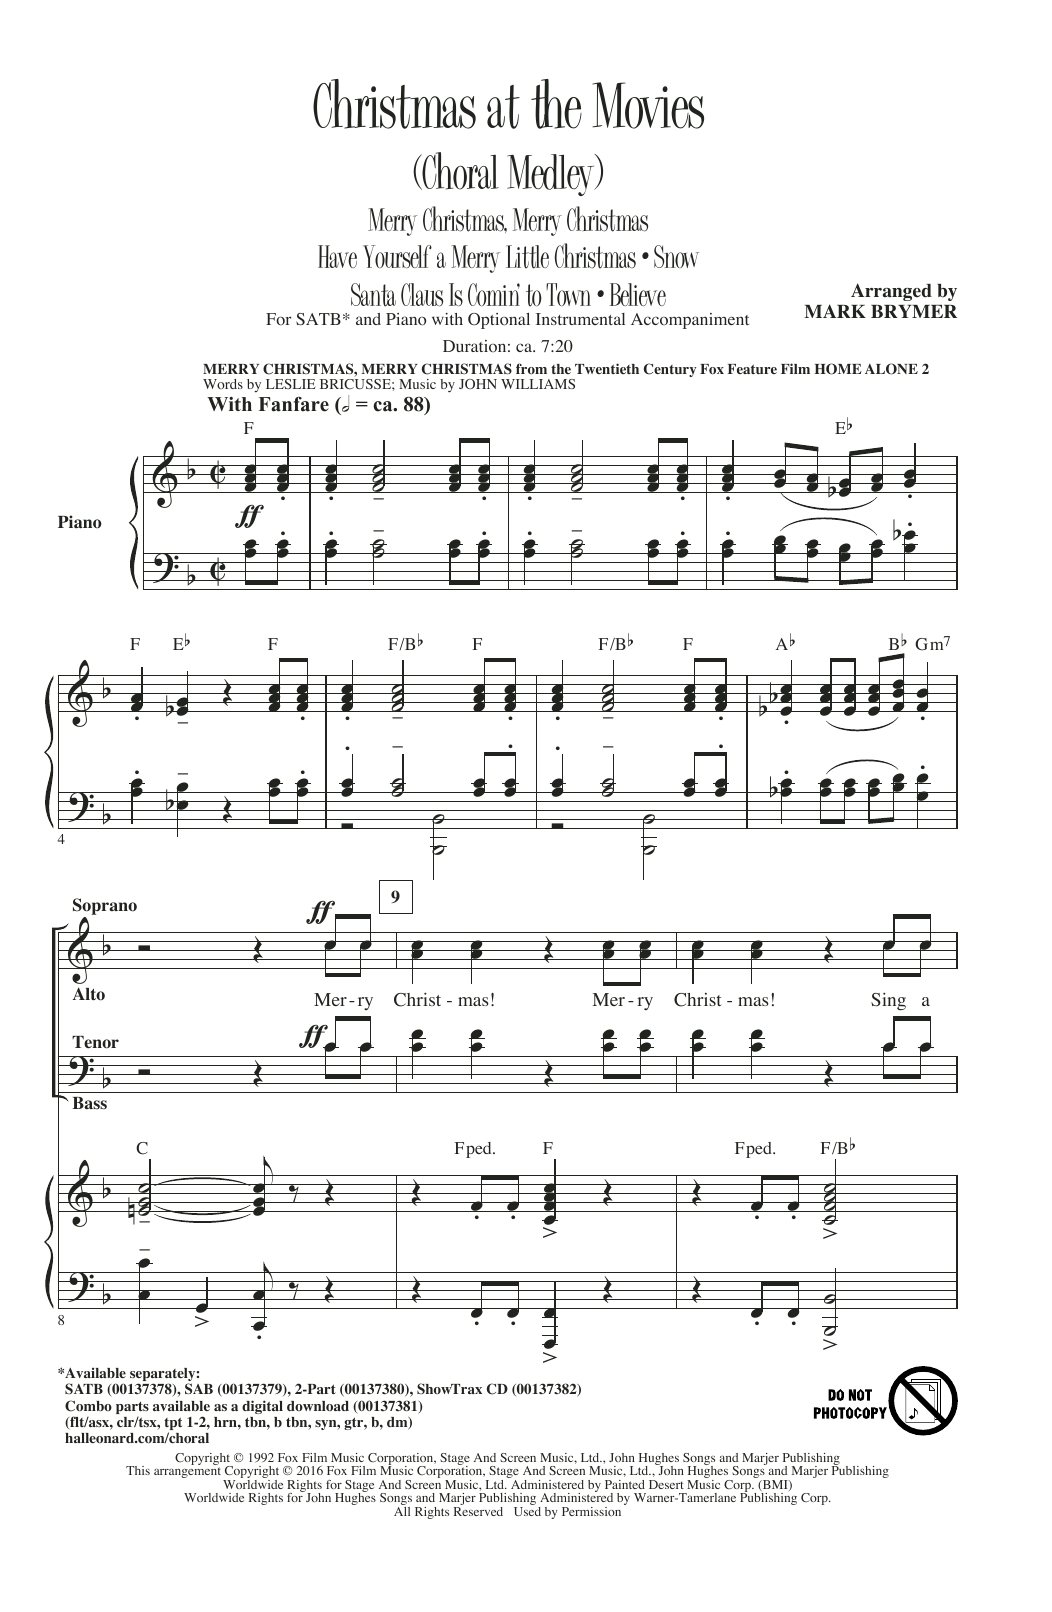 Mark Brymer Christmas At The Movies (Choral Medley) Sheet Music Notes & Chords for SAB - Download or Print PDF